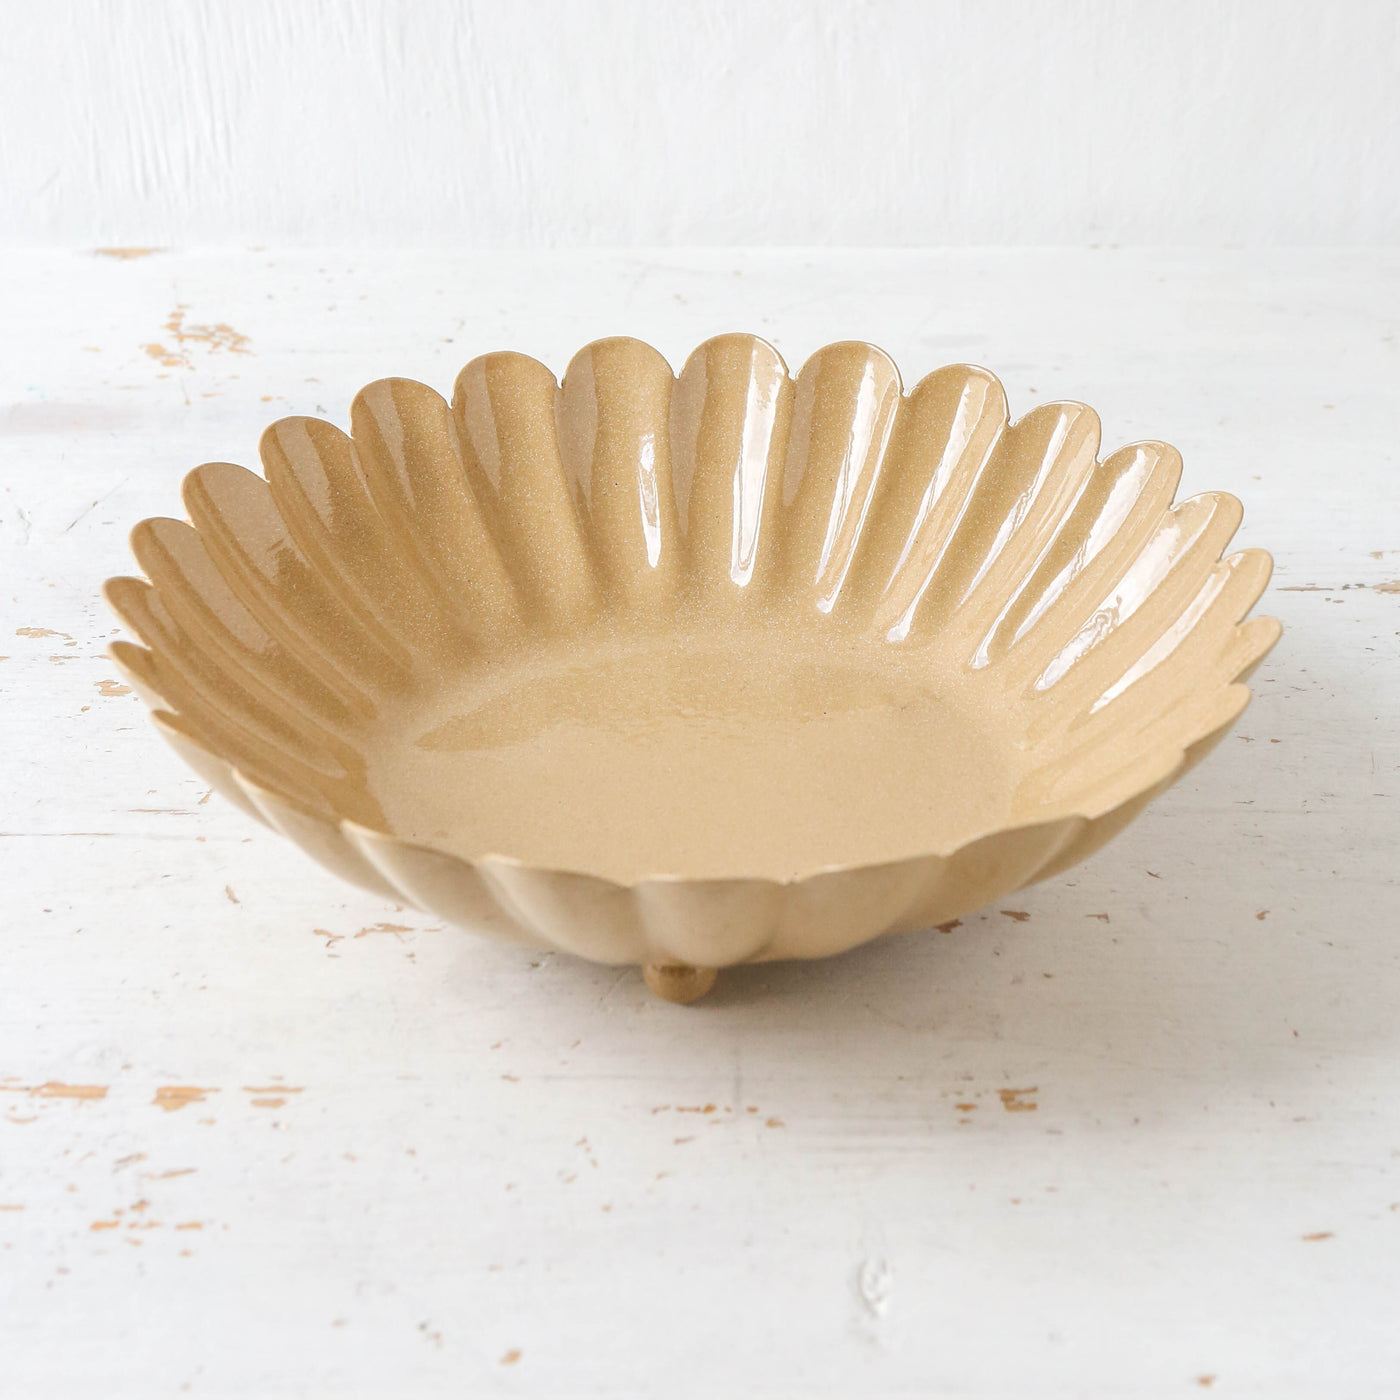 Decorative Scalloped Bowl - Large